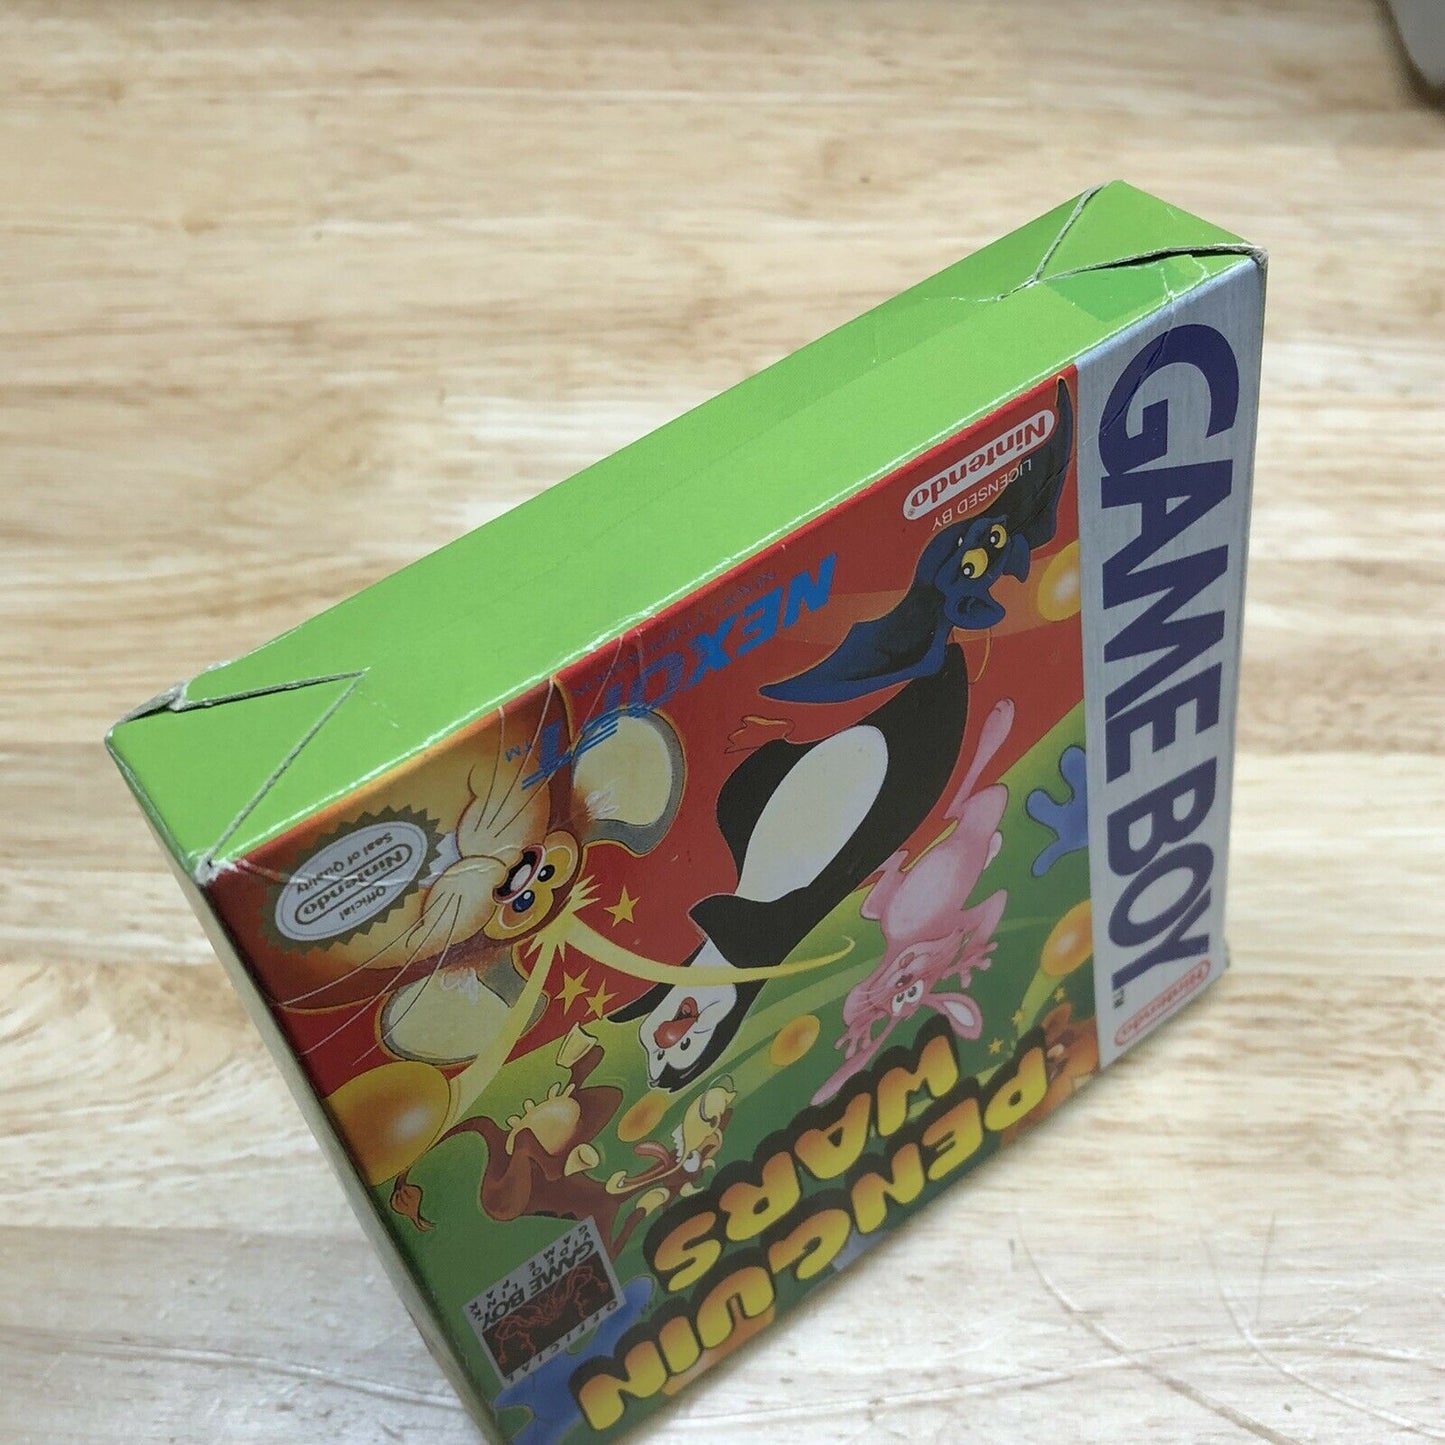 GB - Penguin Wars Nintendo GameBoy 1990 Complete Cib